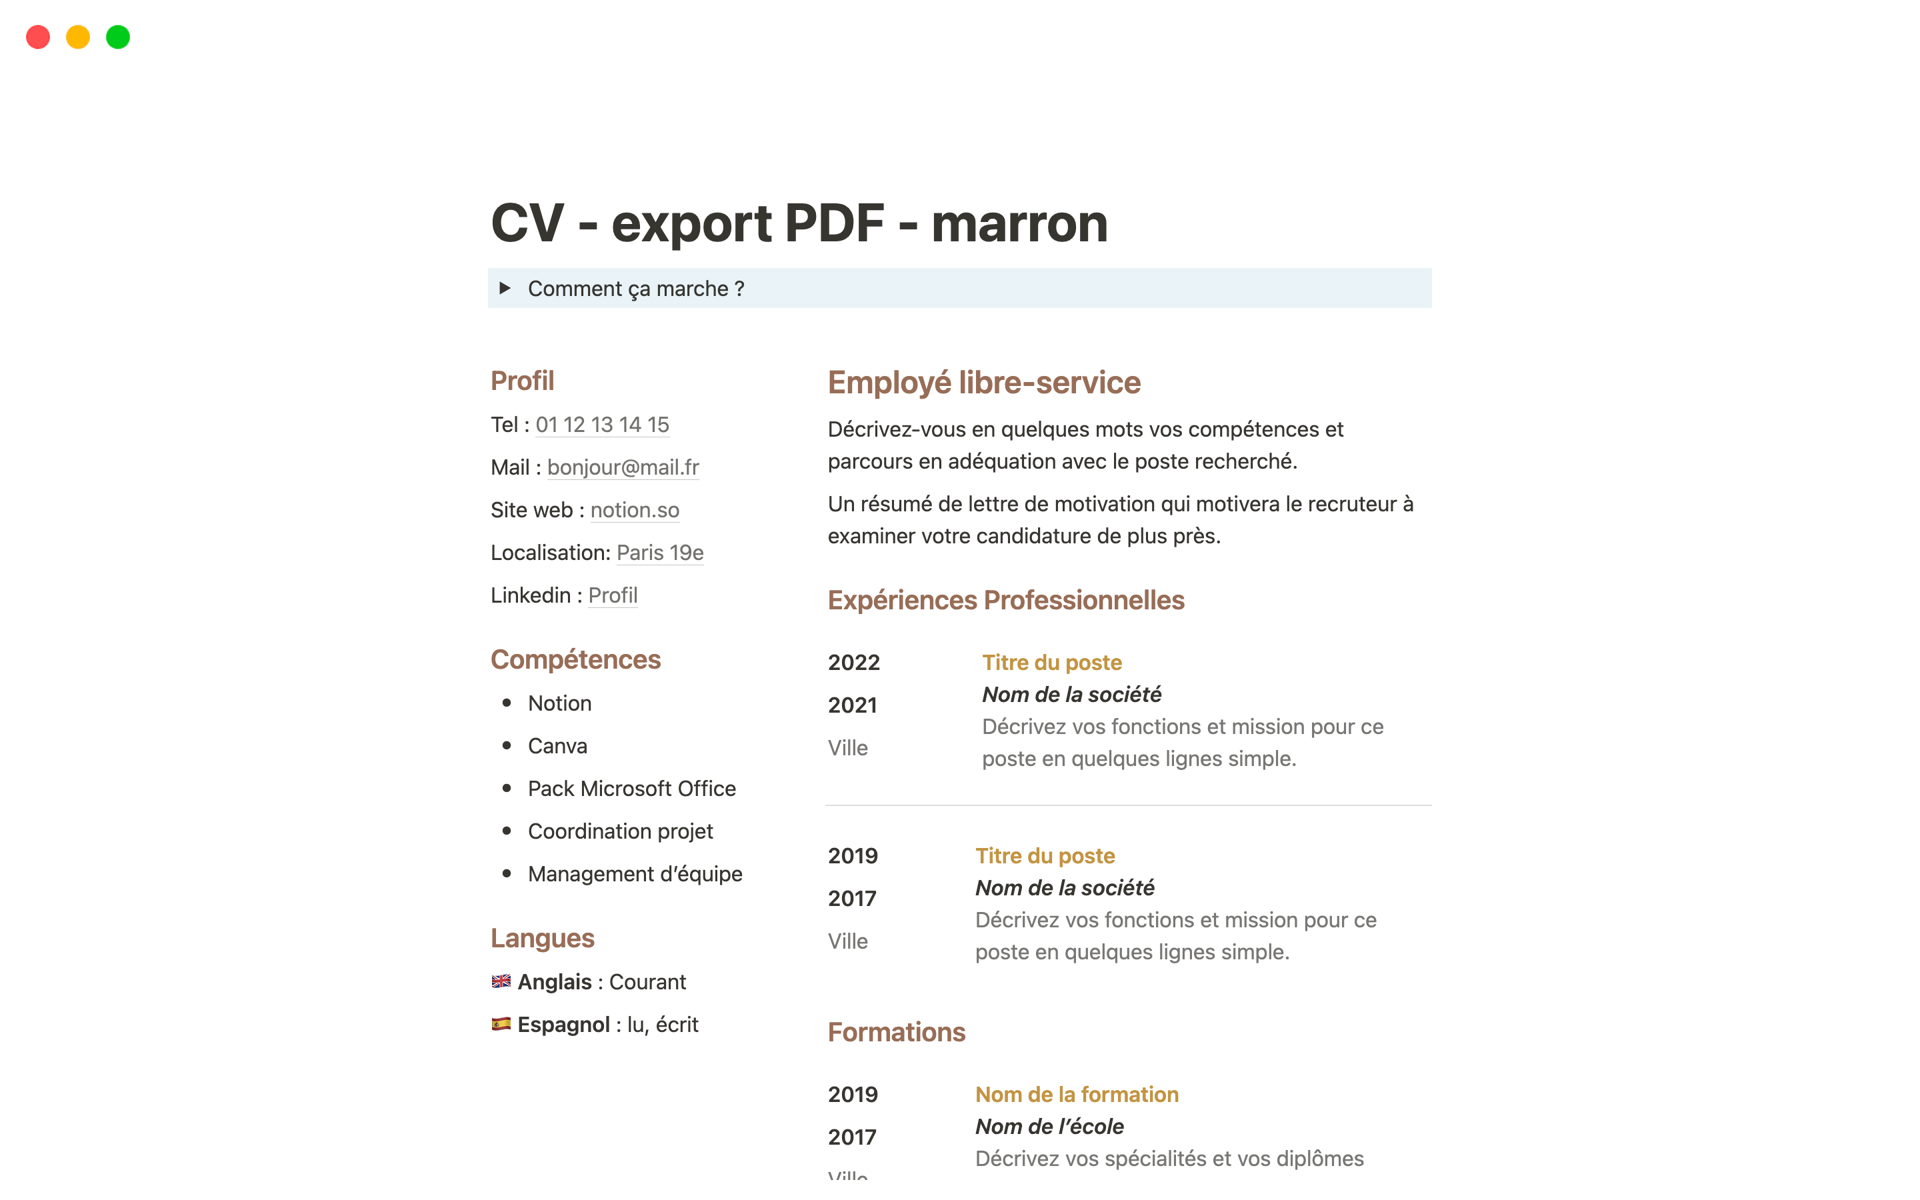 Vista previa de una plantilla para CV simple pour export PDF - marron